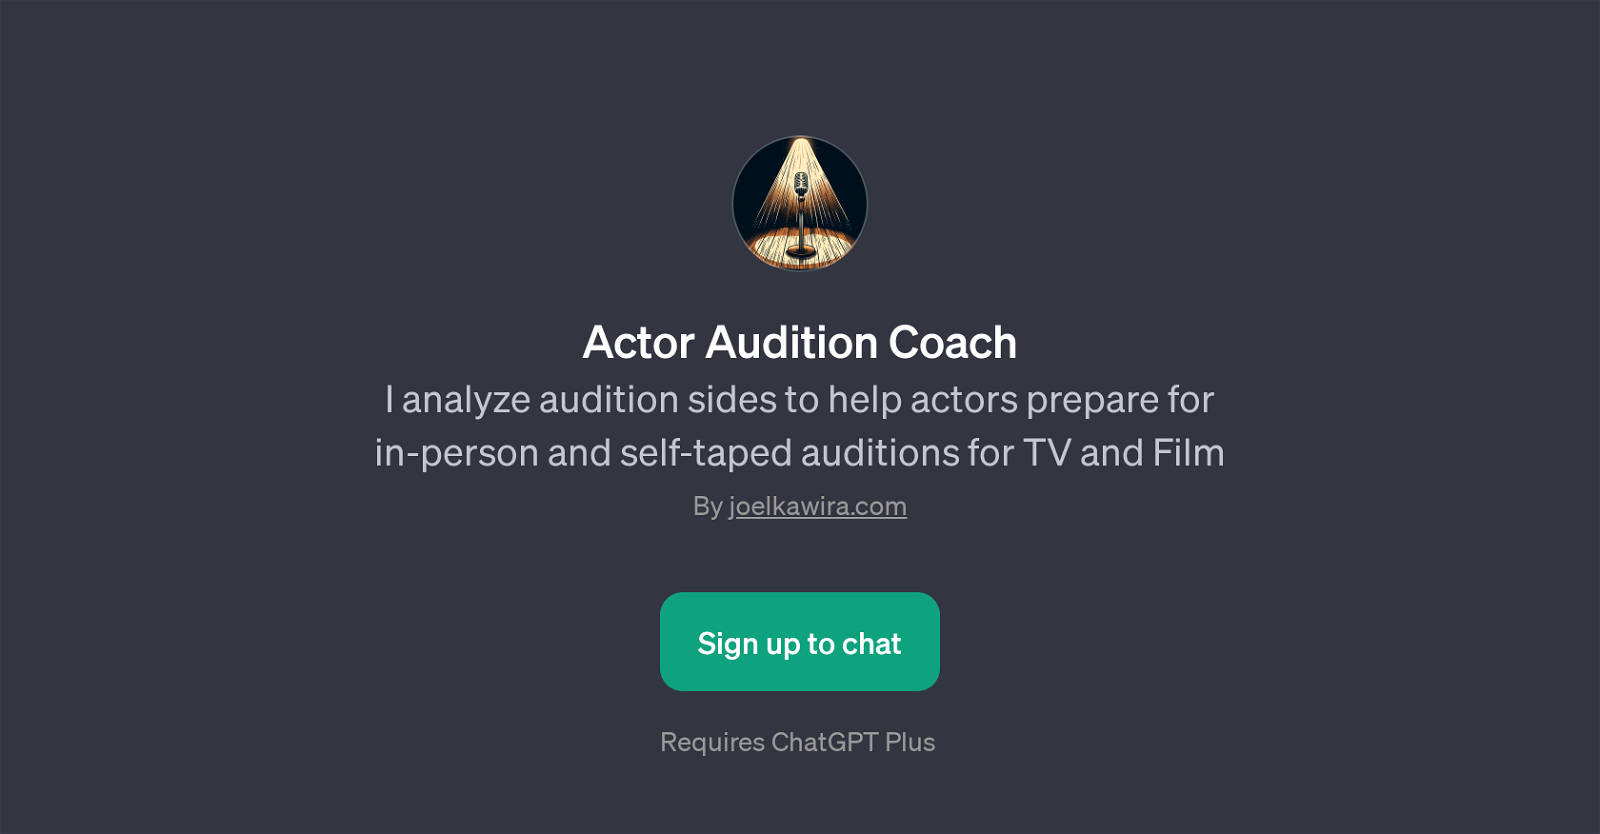 Actor Audition Coach website